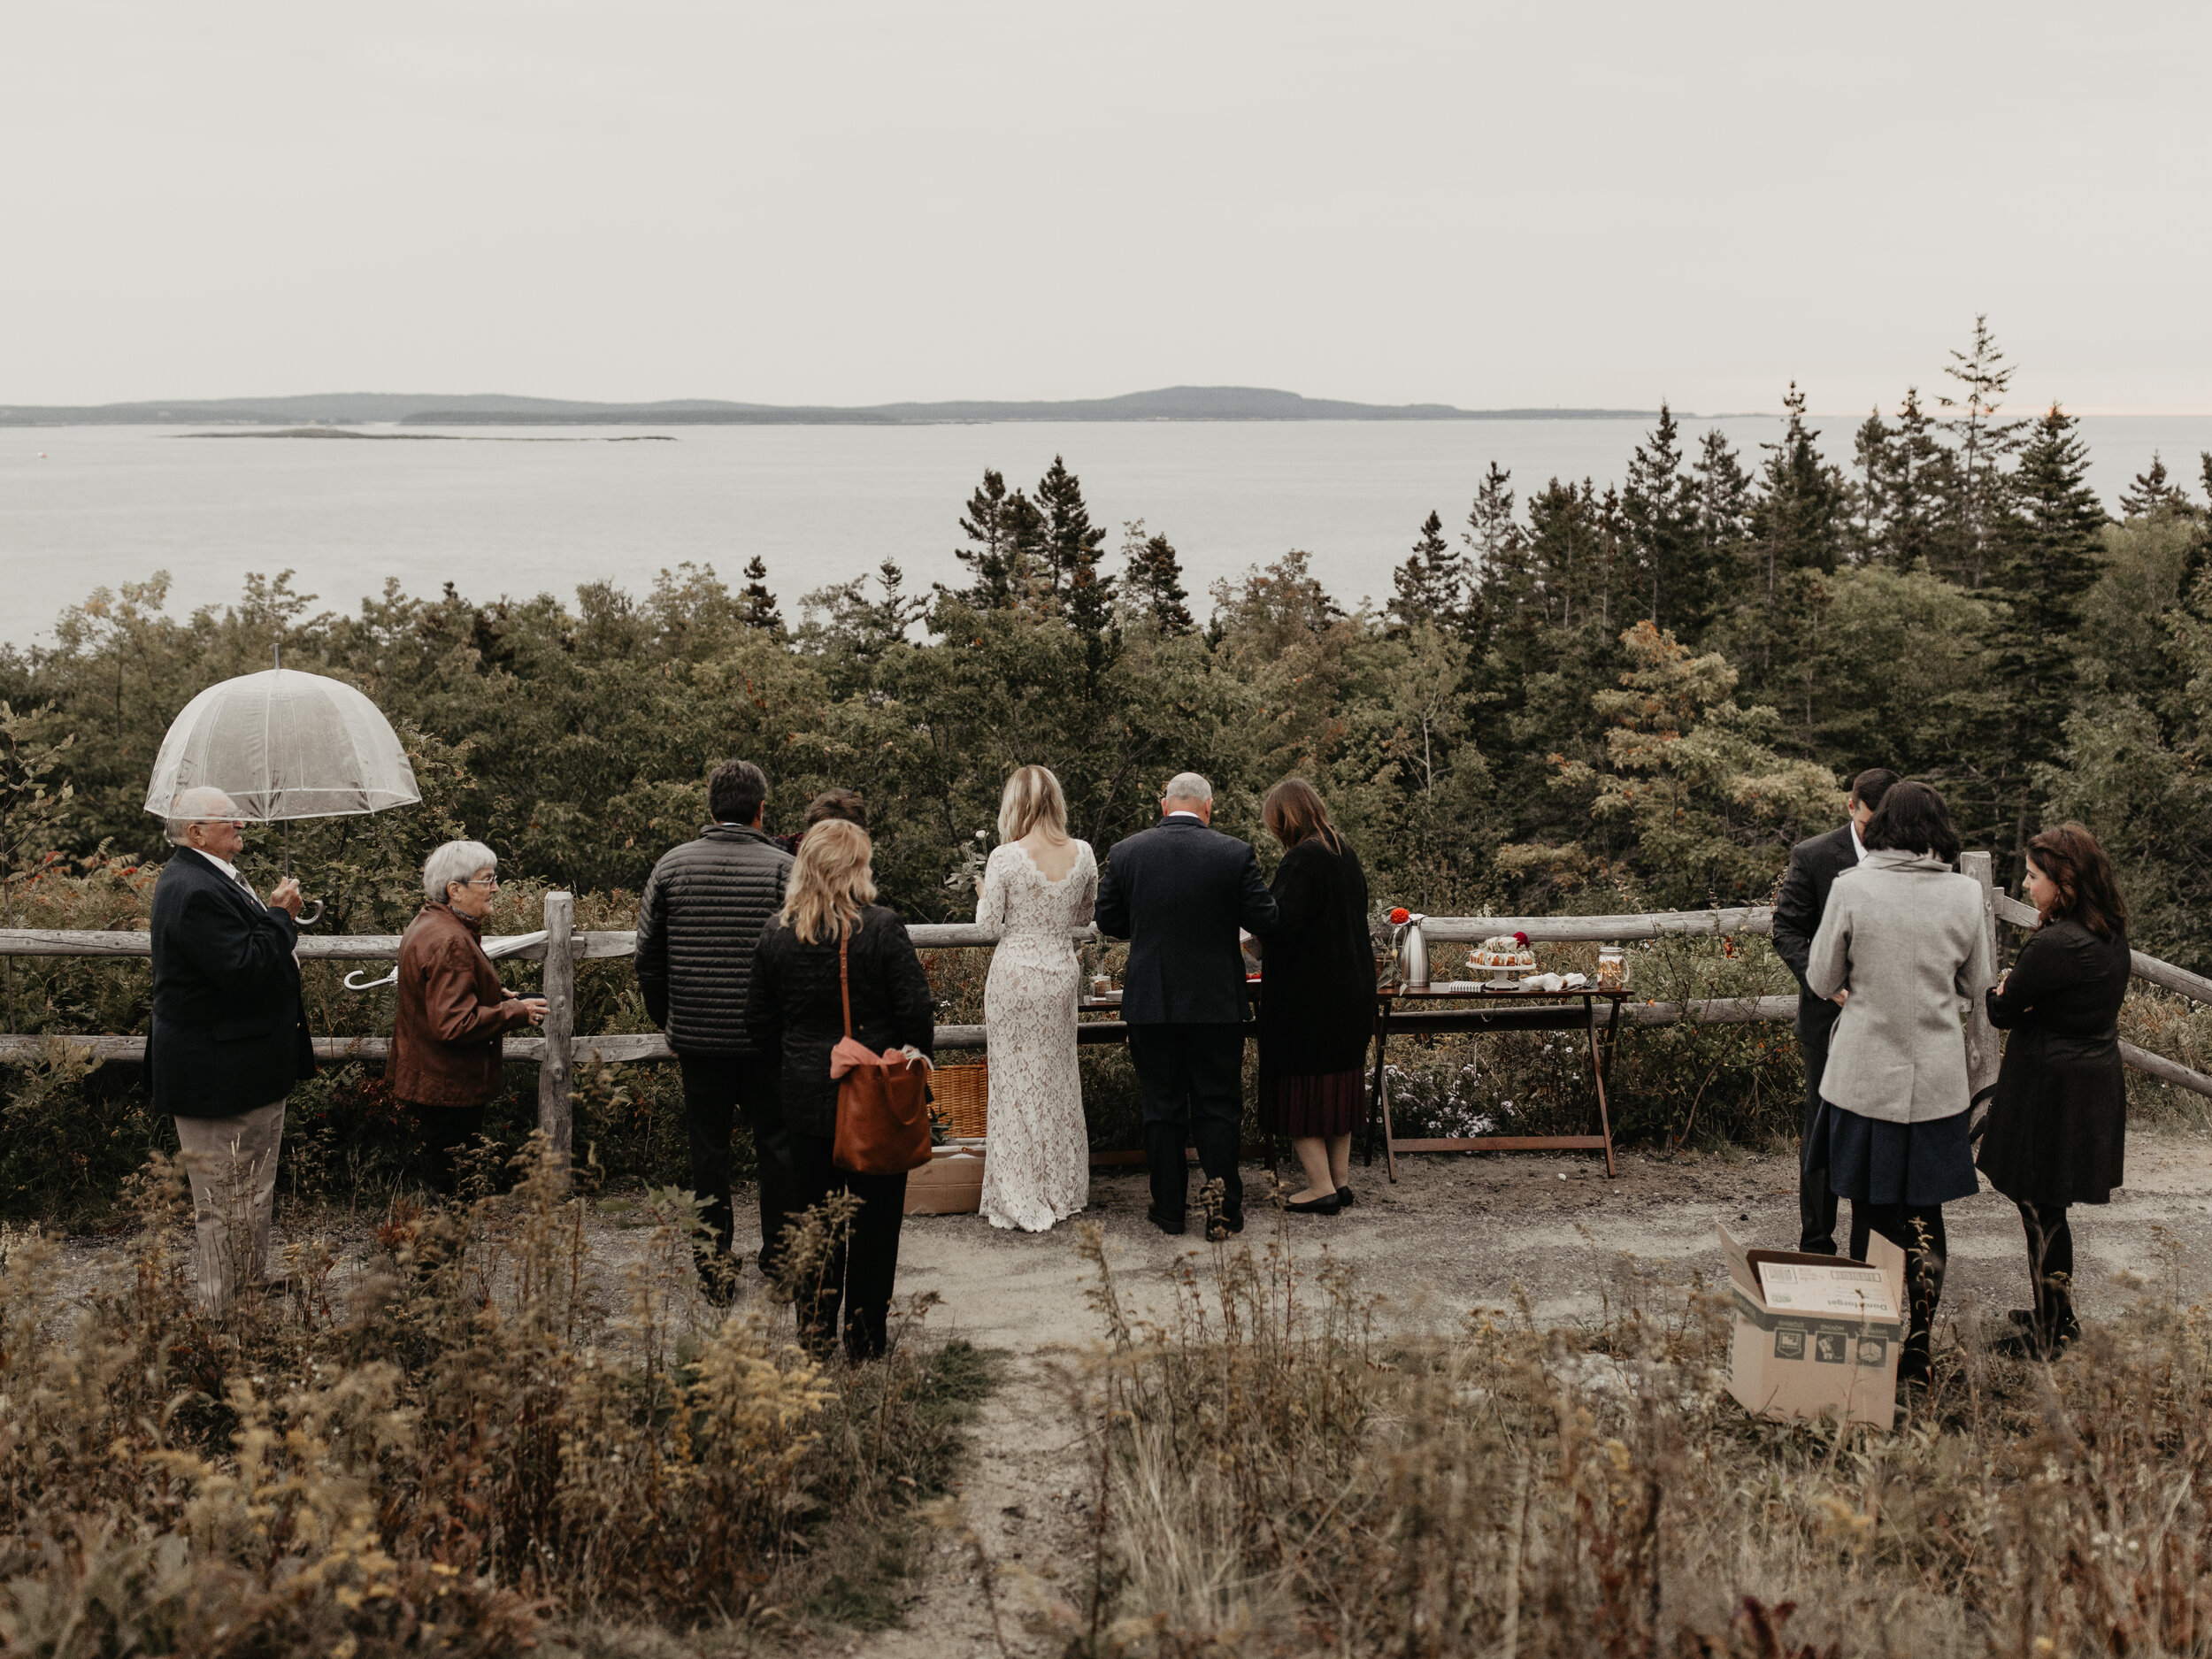 Nicole-Daacke-Photography-Acadia-national-park-elopement-photography-elopement-in-acadia-inspiration-maine-intimate-wedding-destination-elopement-photographer-rainy-day-maine-coast-bar-harbor-elopement-photography-125.jpg